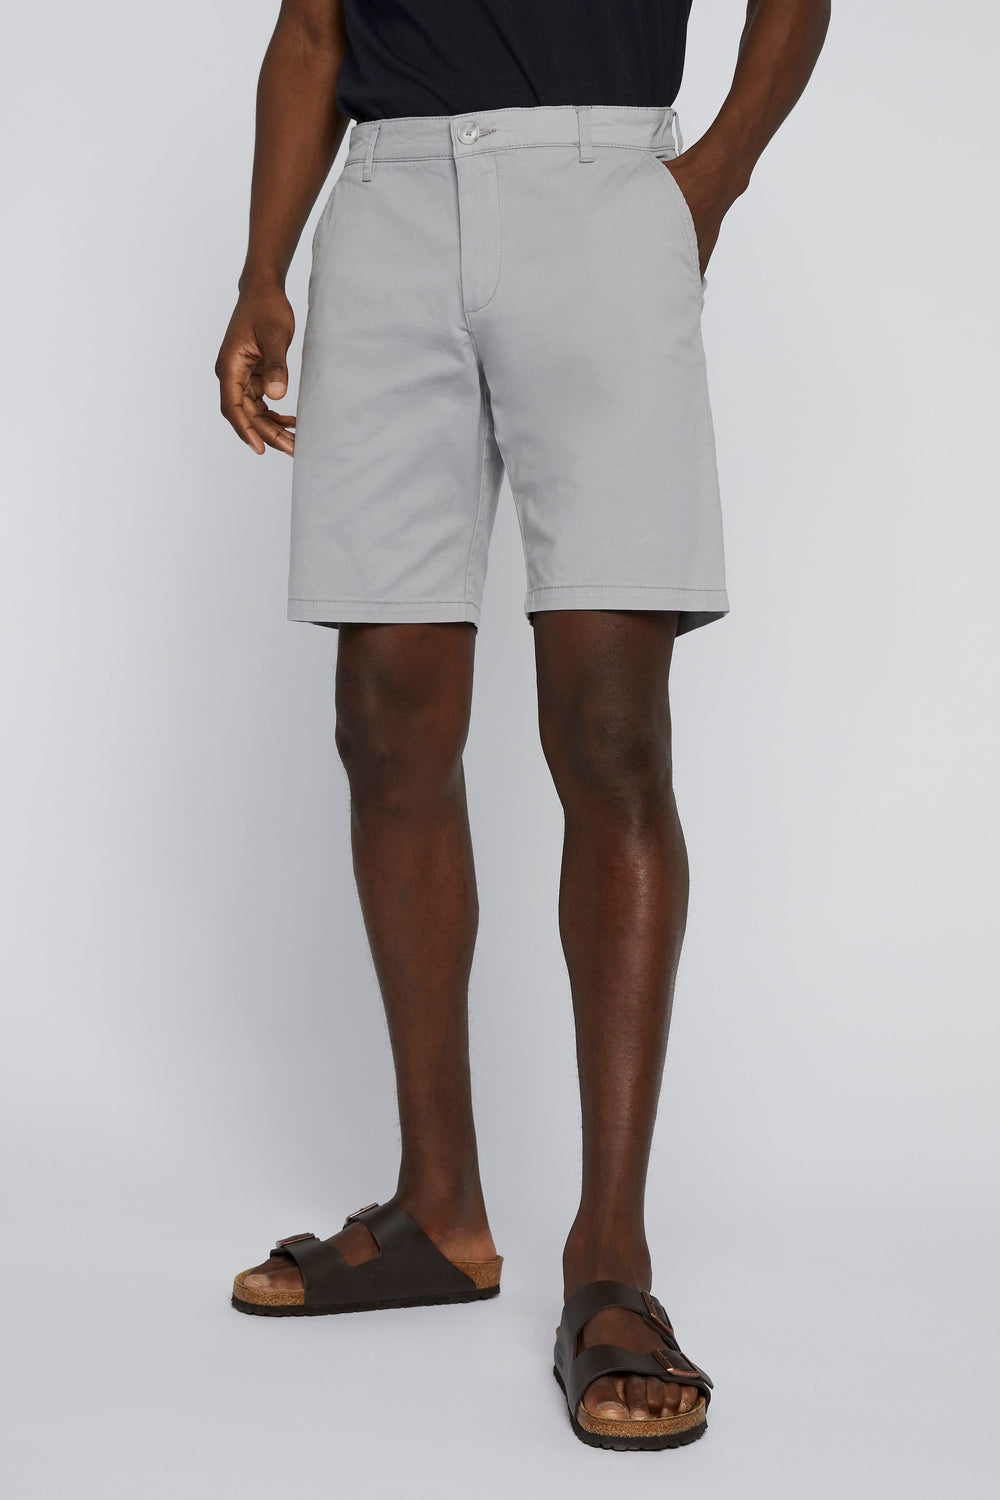 Matinique Thomas Chino Shorts Alloy Grey - Urban Menswear